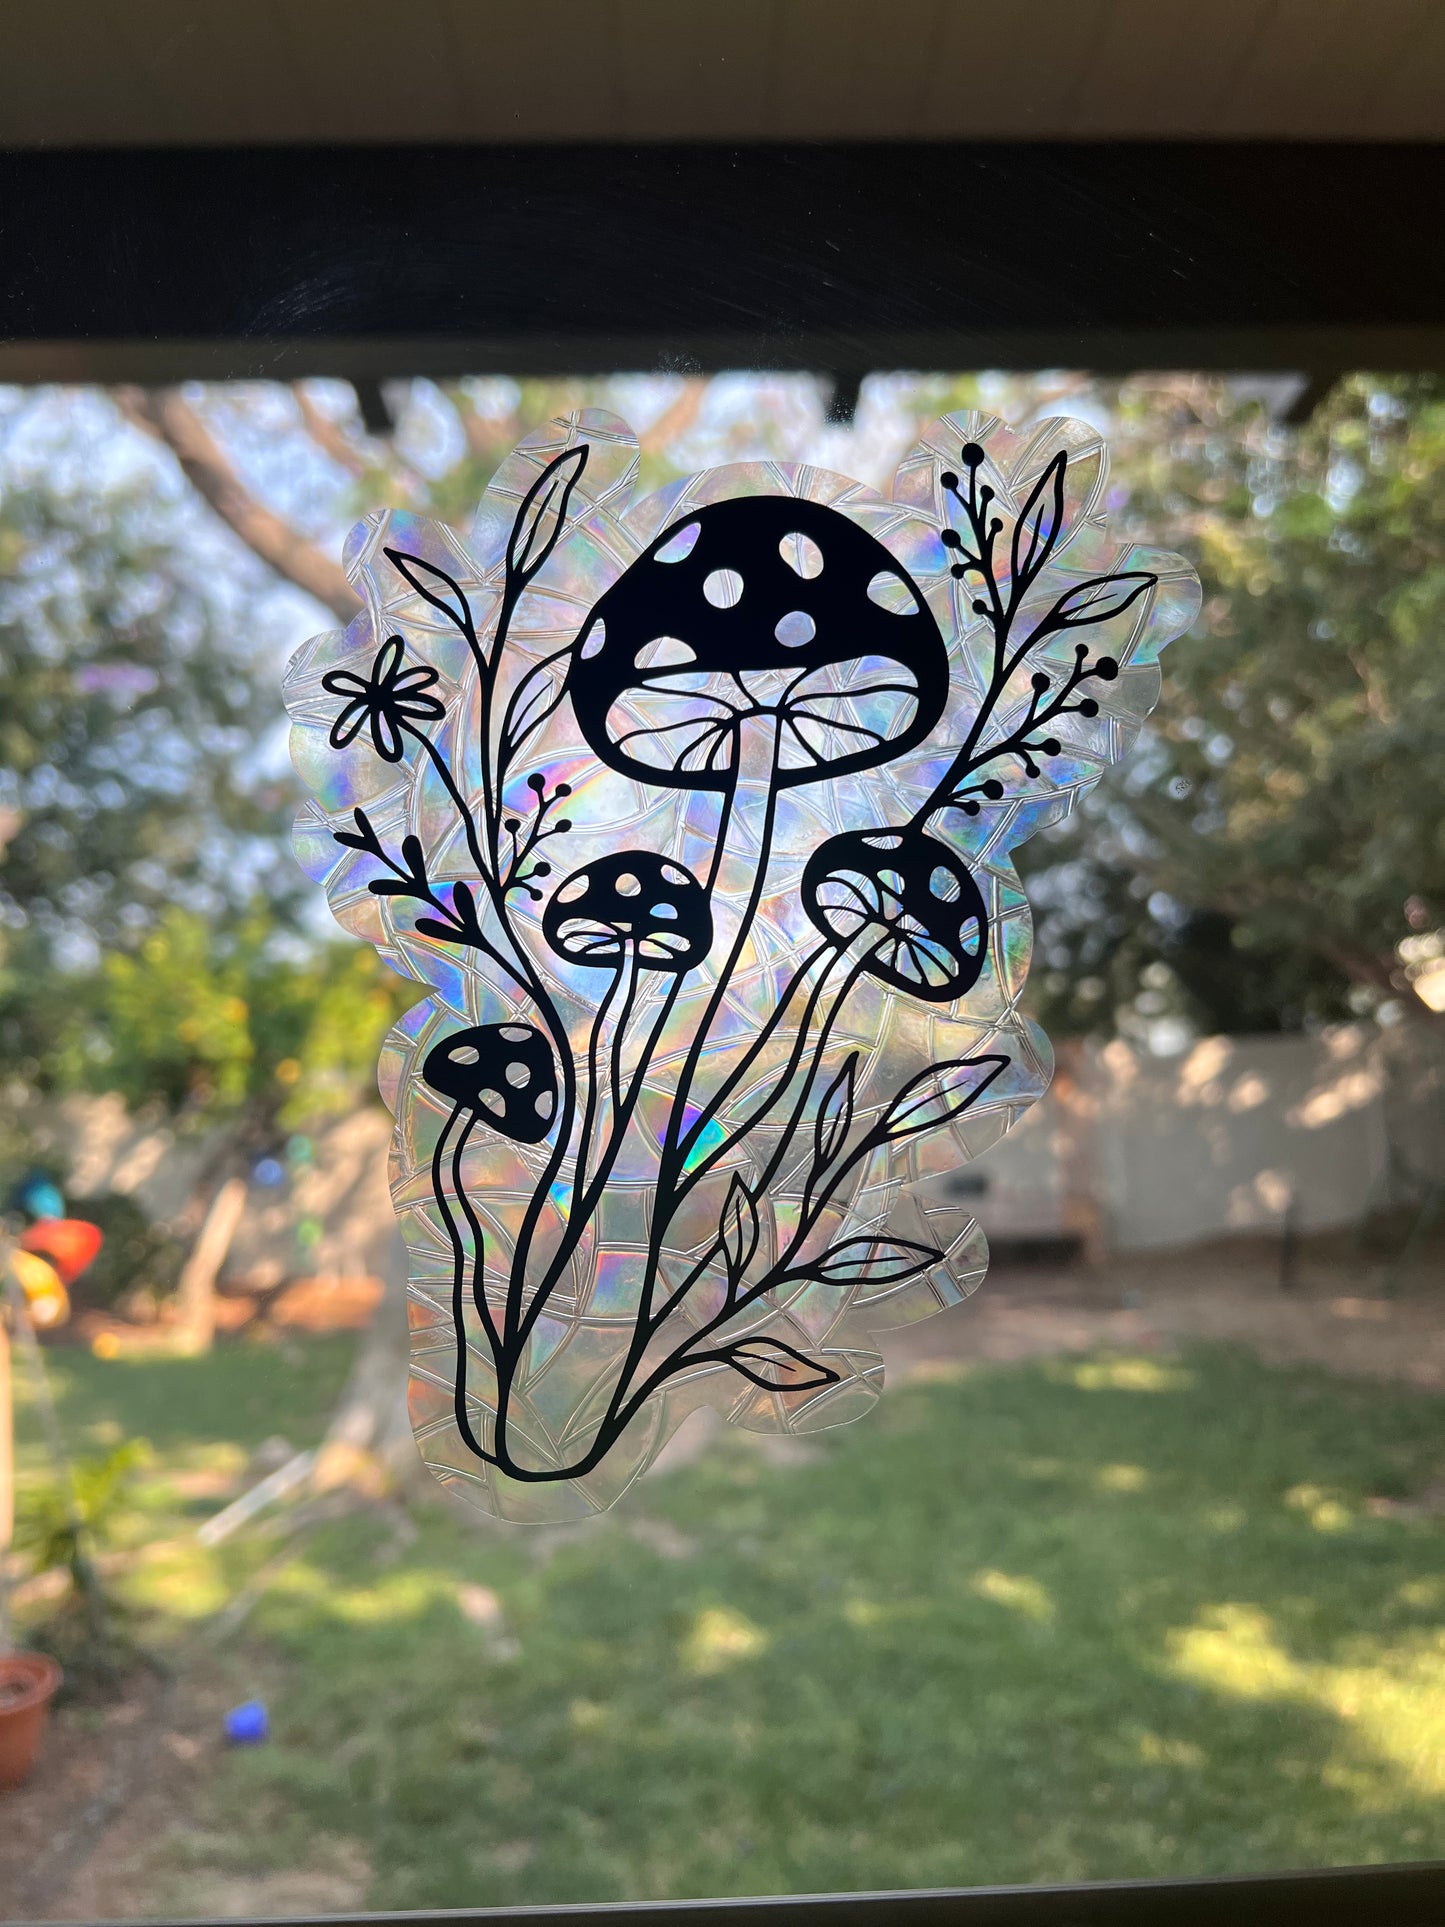 Mushroom window cling